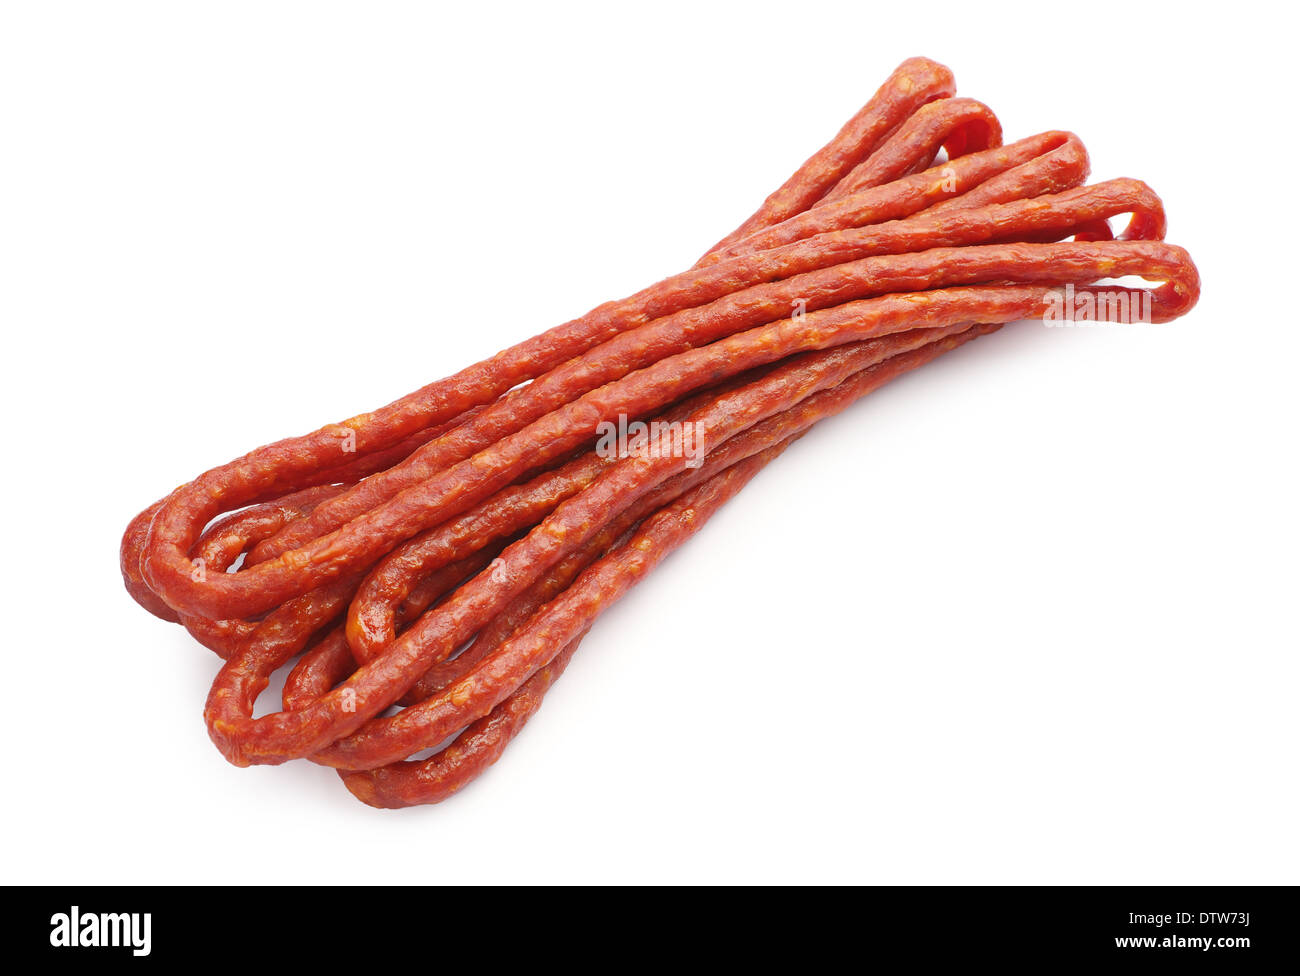 Thin smoked sausage on white background Stock Photo